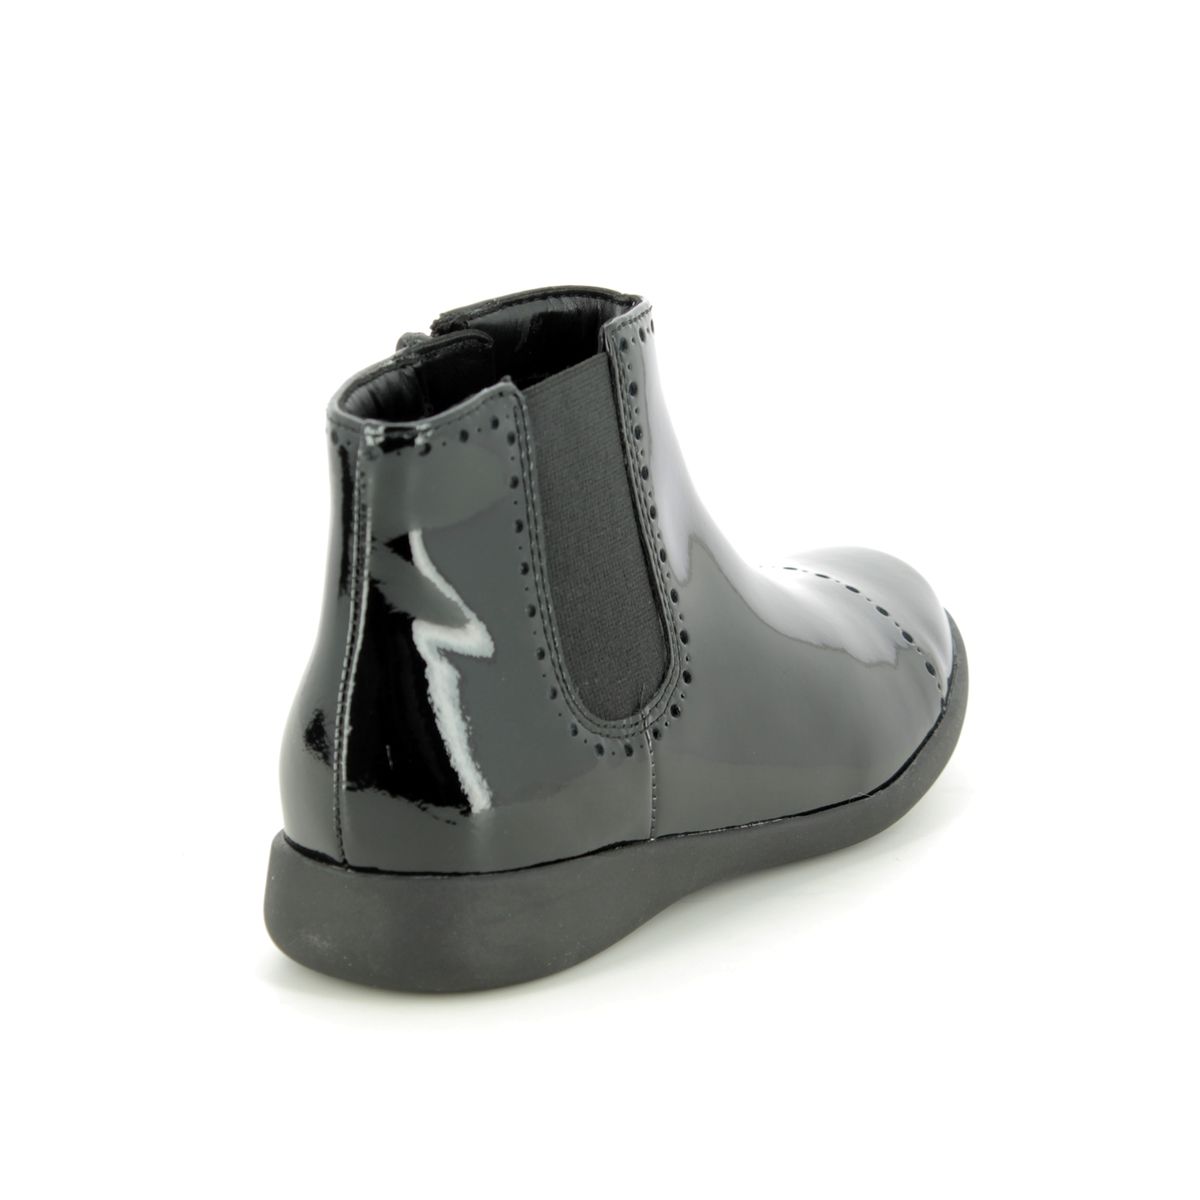 clarks black patent boots